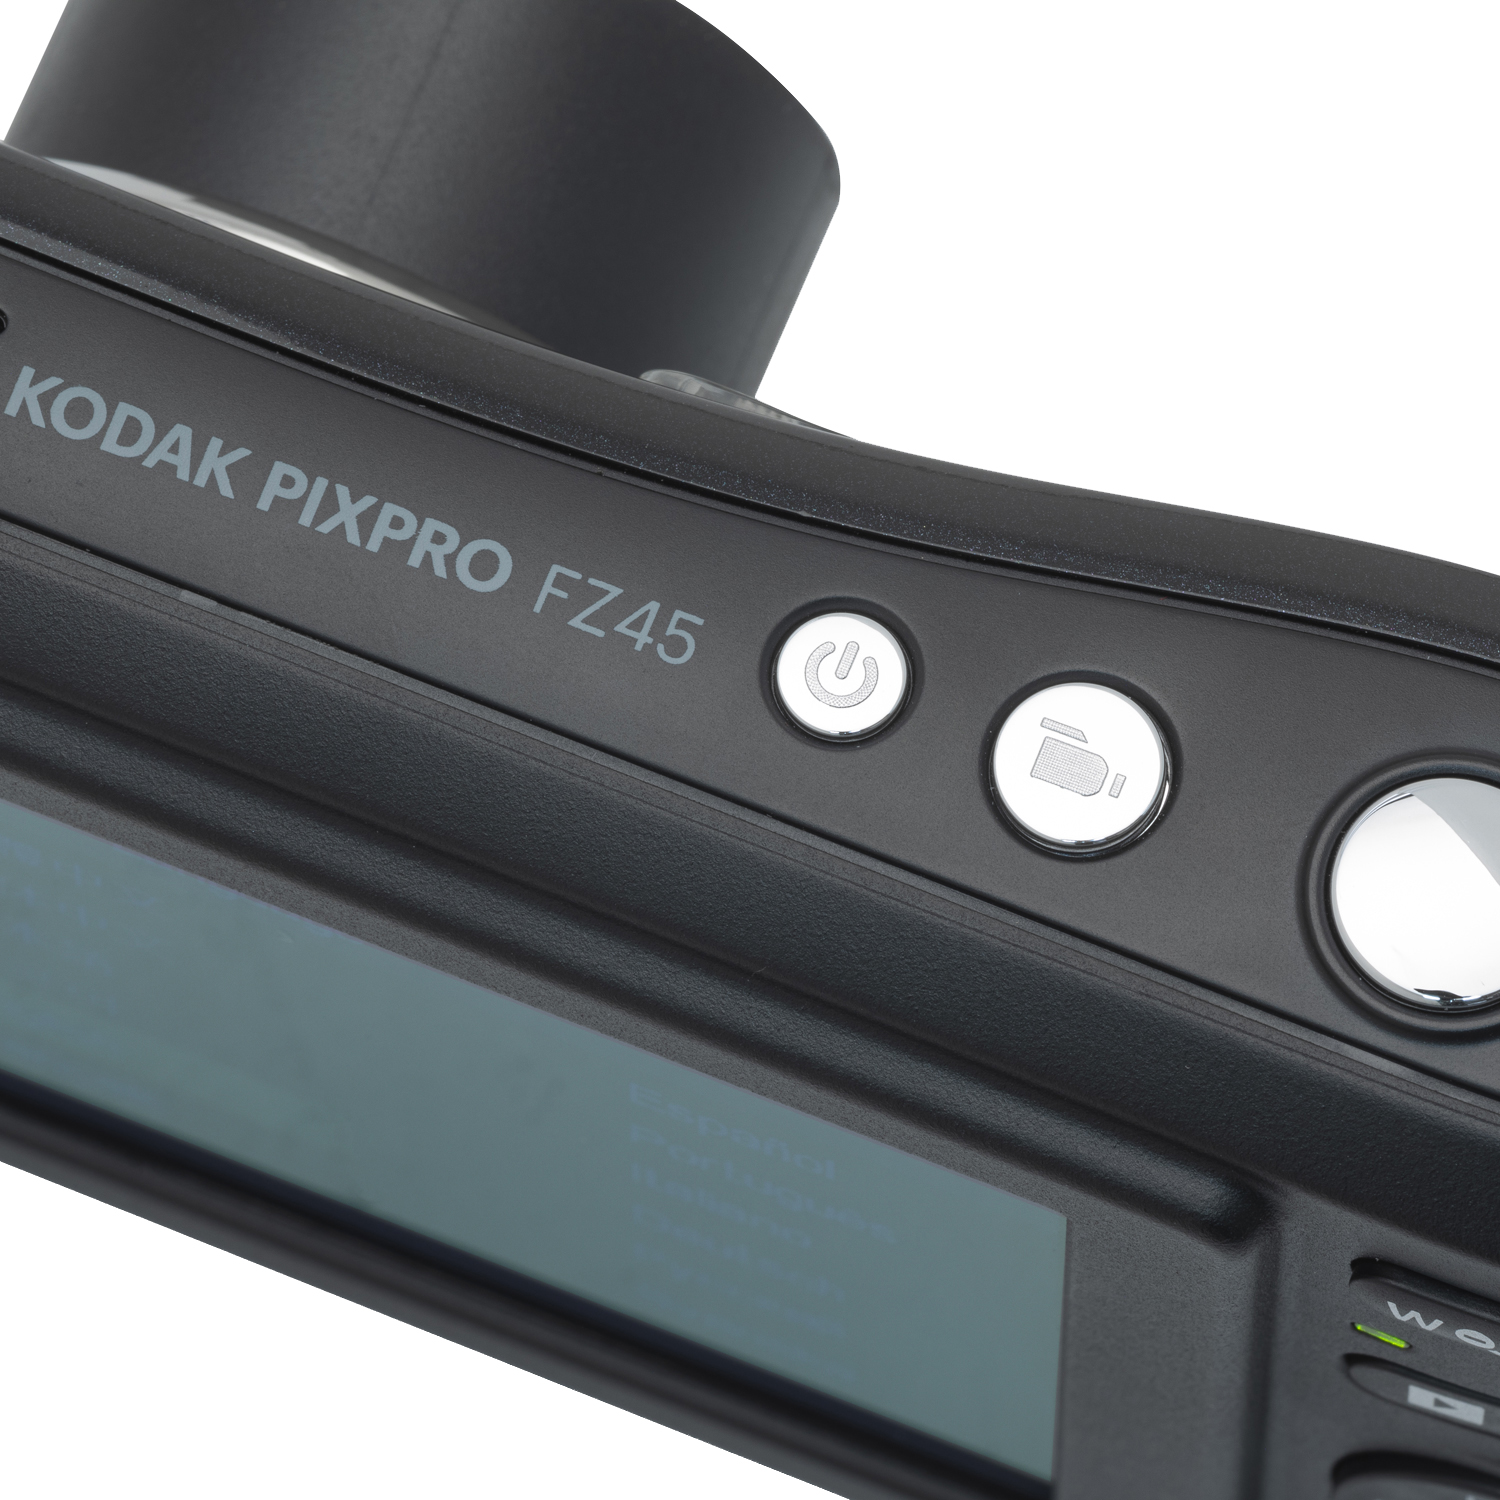 Kodak Pixpro FZ45 Digital Camera (Black) FZ45BK B&H Photo Video